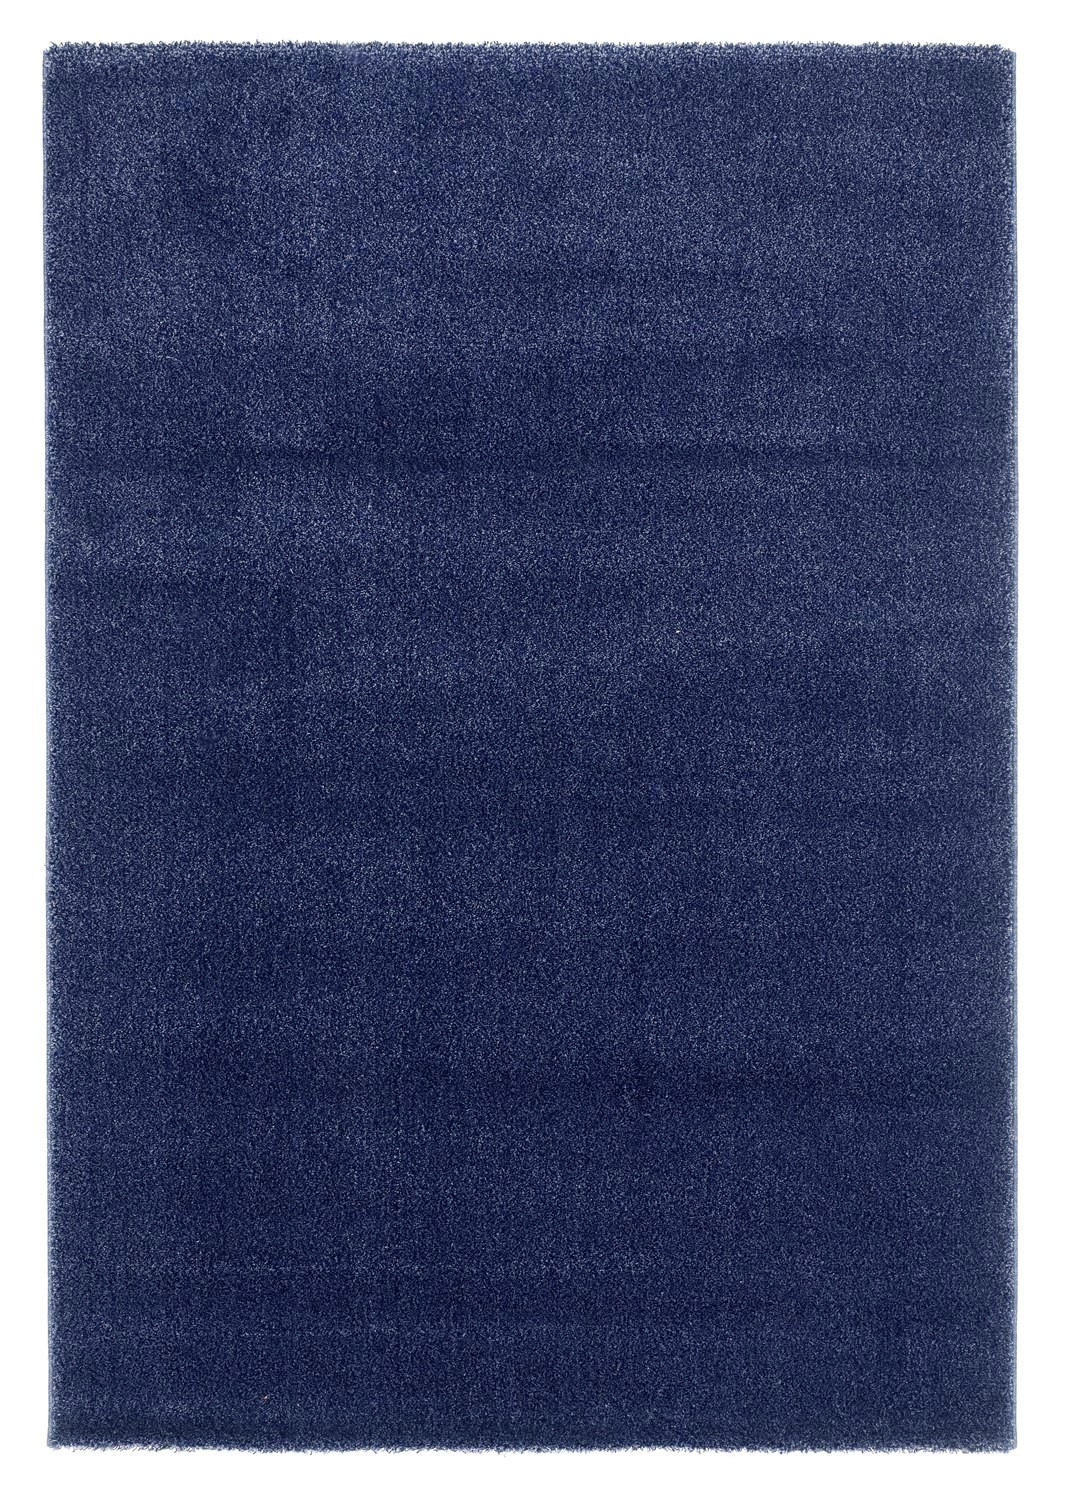 WEBTEPPICH  200/250 cm  Blau   - Blau, Basics, Textil (200/250cm) - Novel